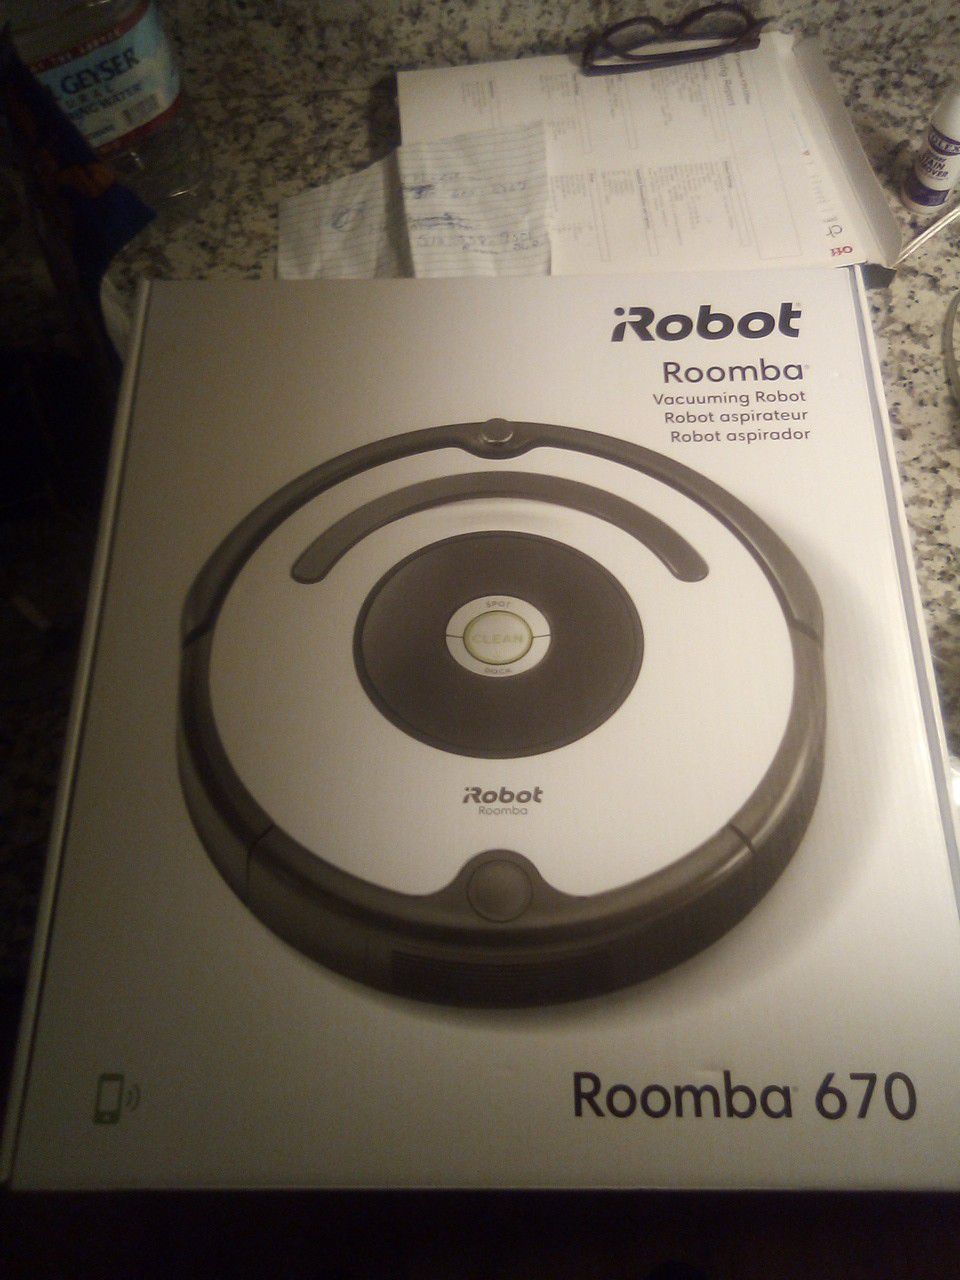 I Roomba vacuum cleaner